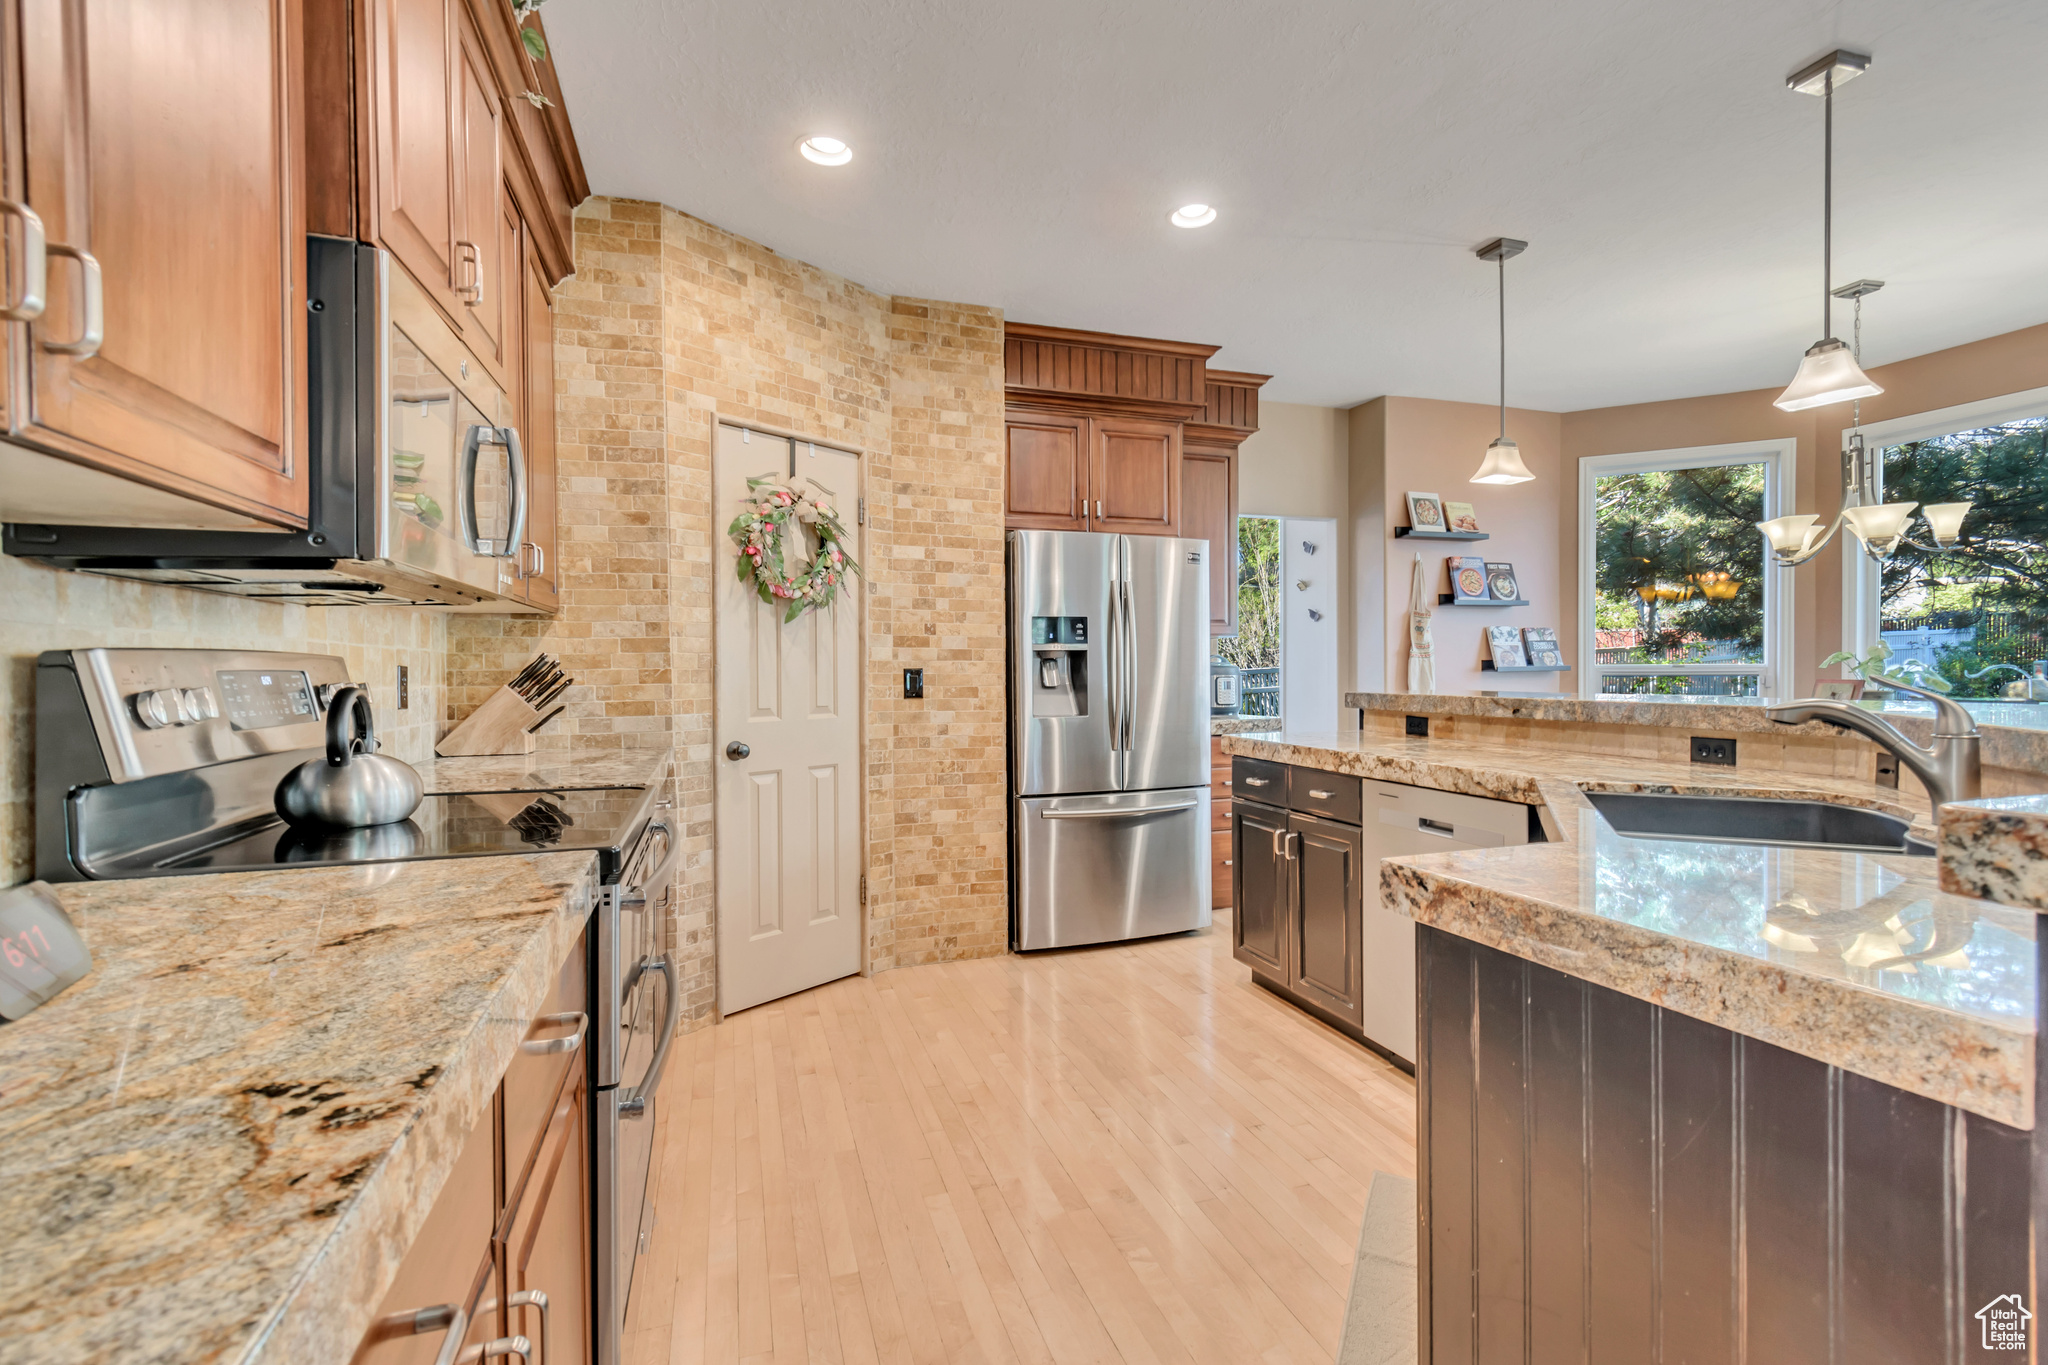 Kitchen with backsplash, stainless steel appliances, light hardwood / wood-style floors, sink, and pendant lighting